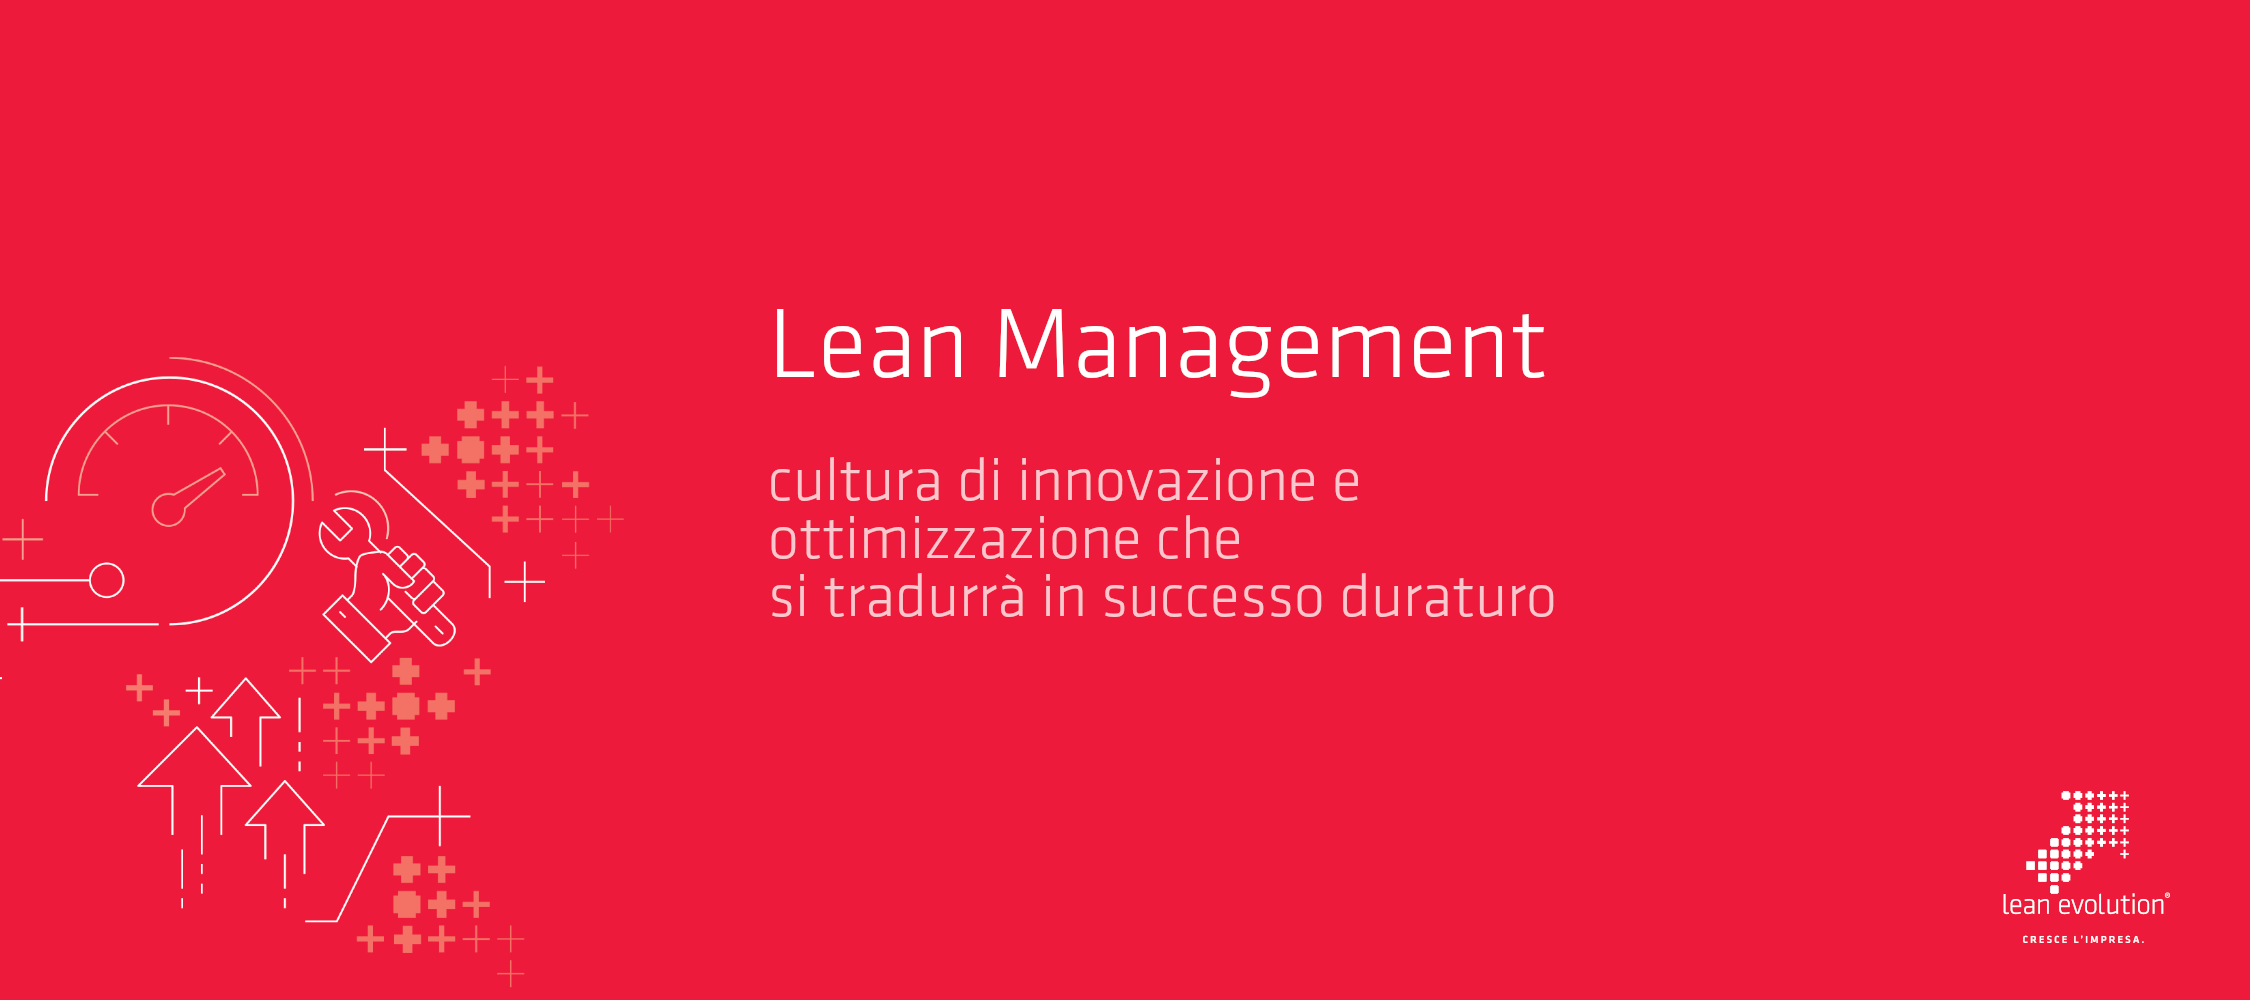 Lean Management immagine 1